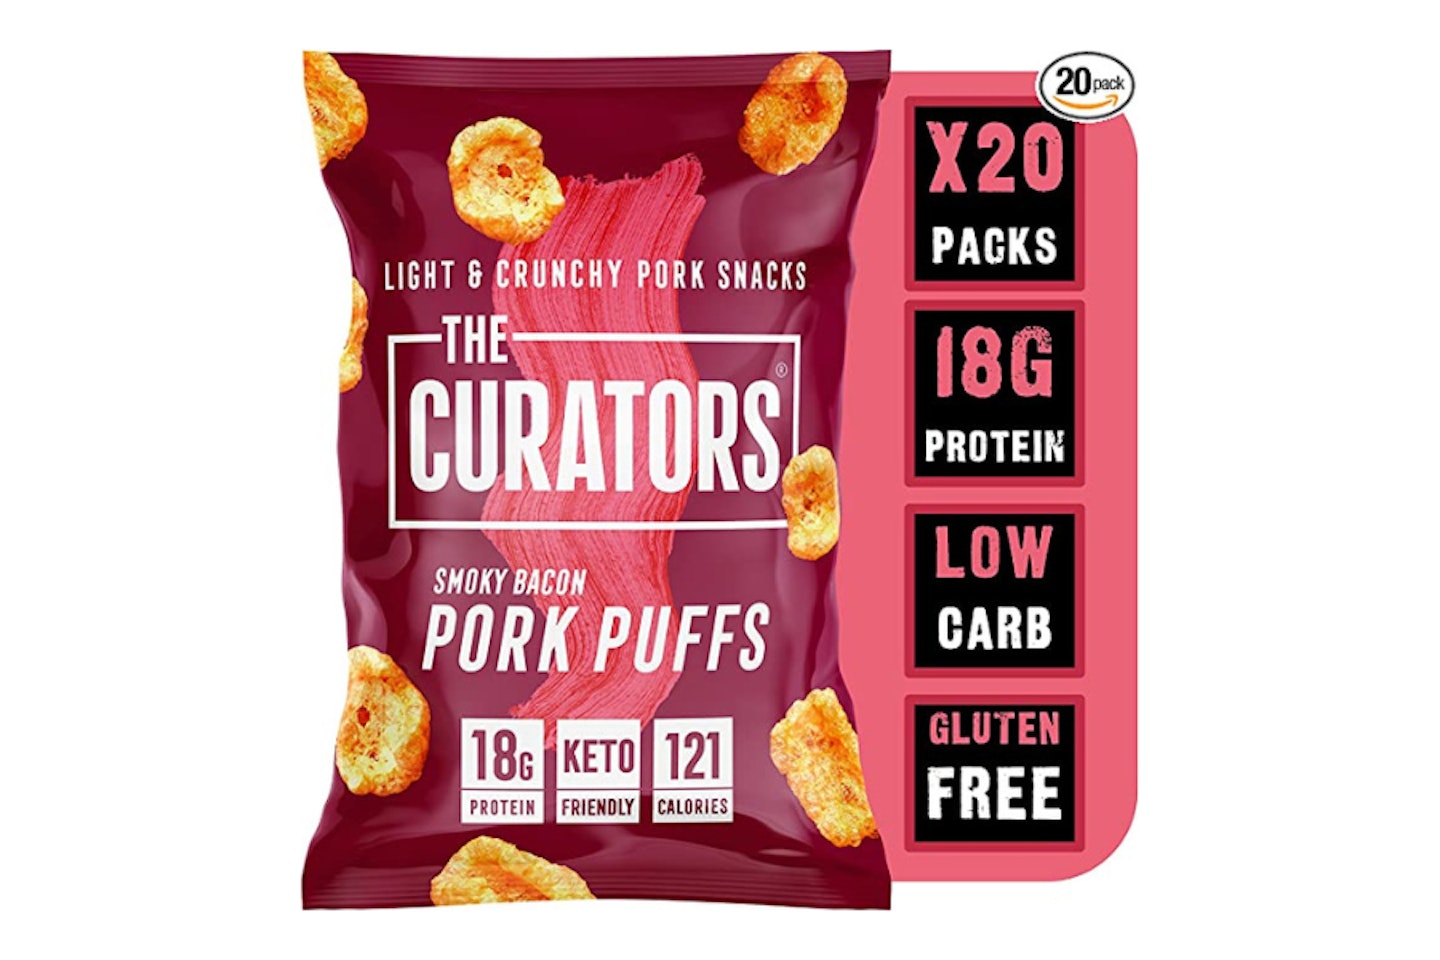 THE CURATORS High Protein Pork Puffs